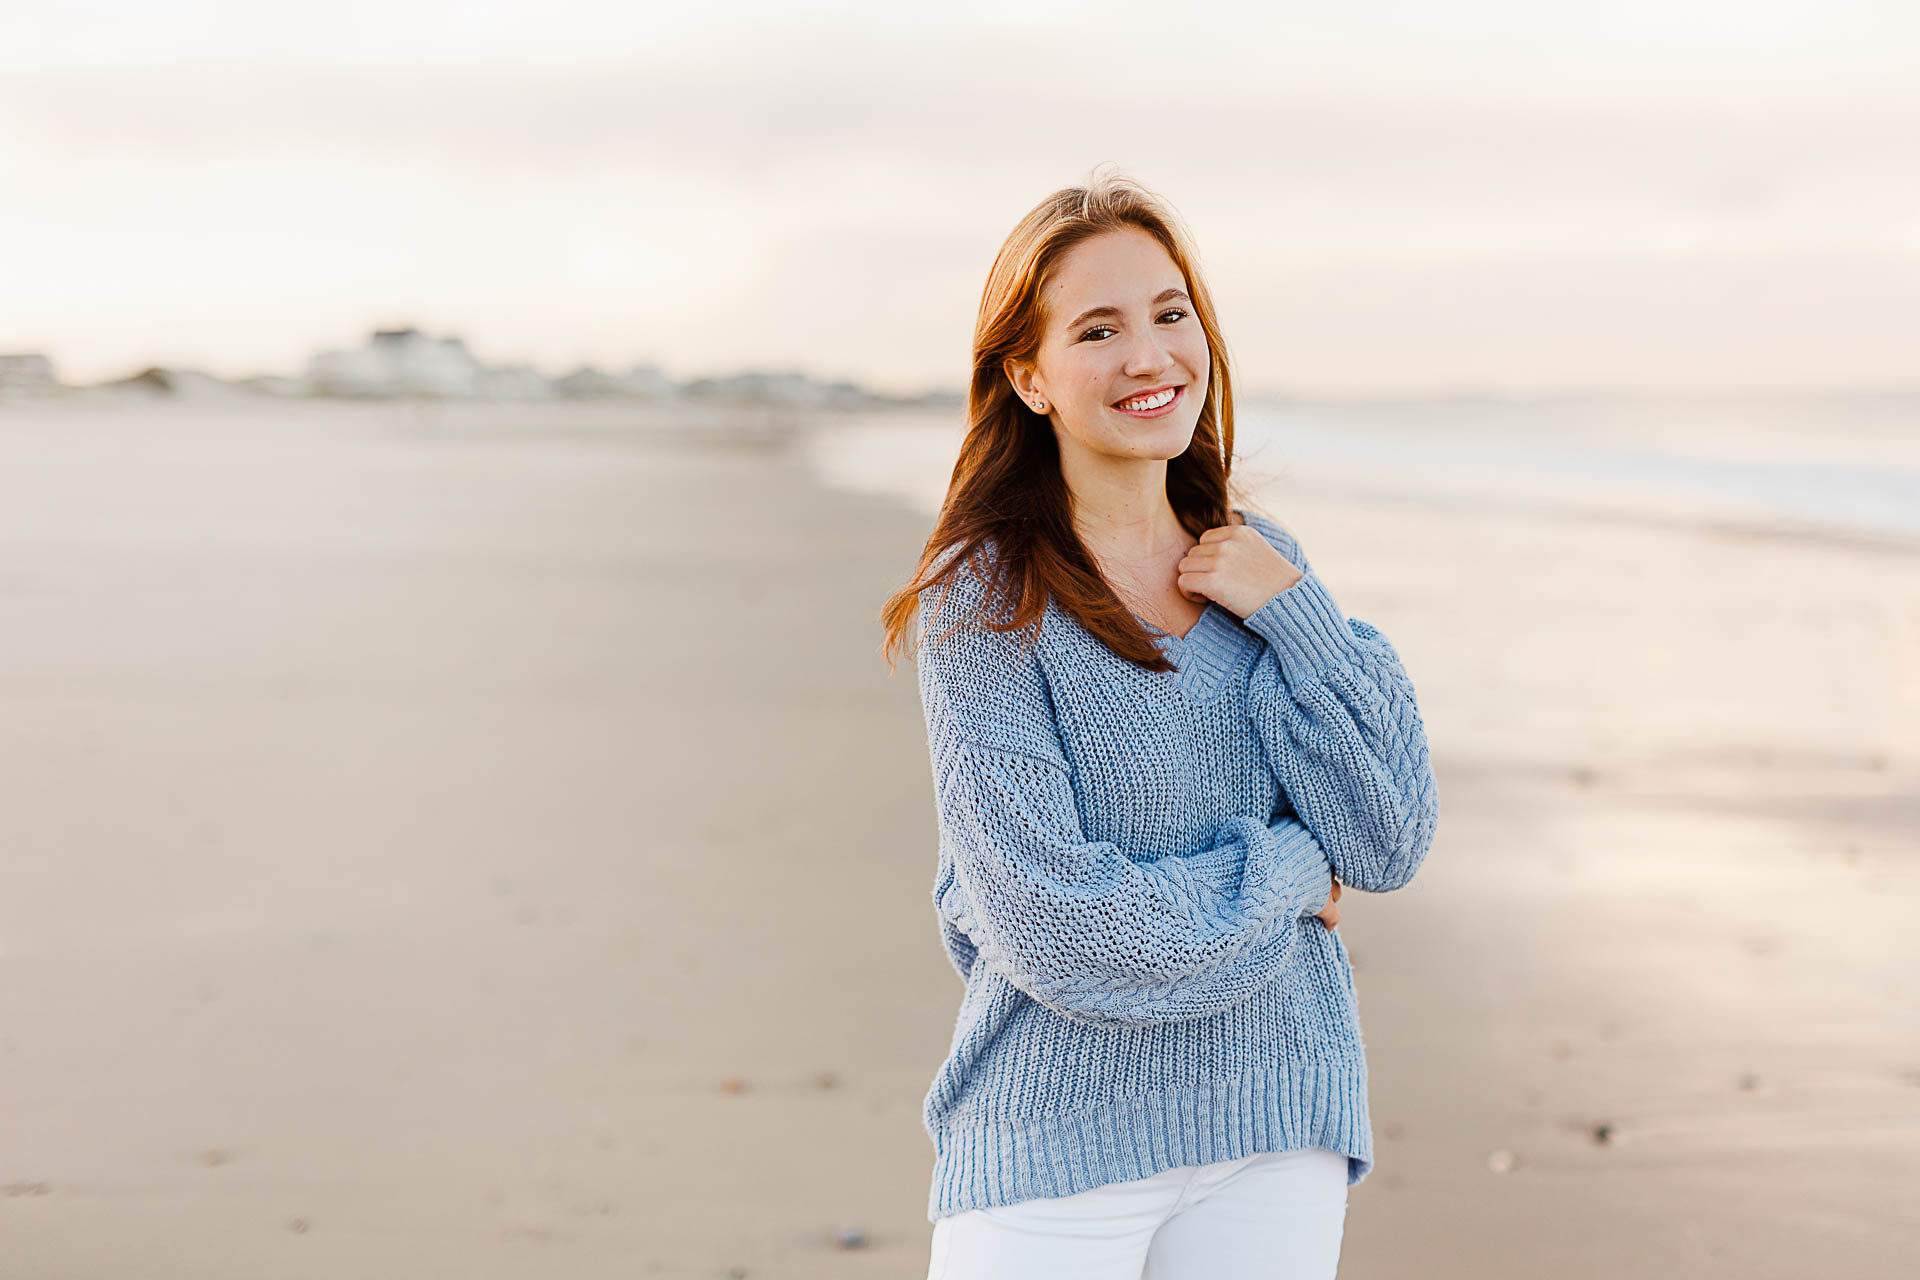 Photo by Cohasset senior photographer Christina Runnals | High school senior girl standing on the beach smiling